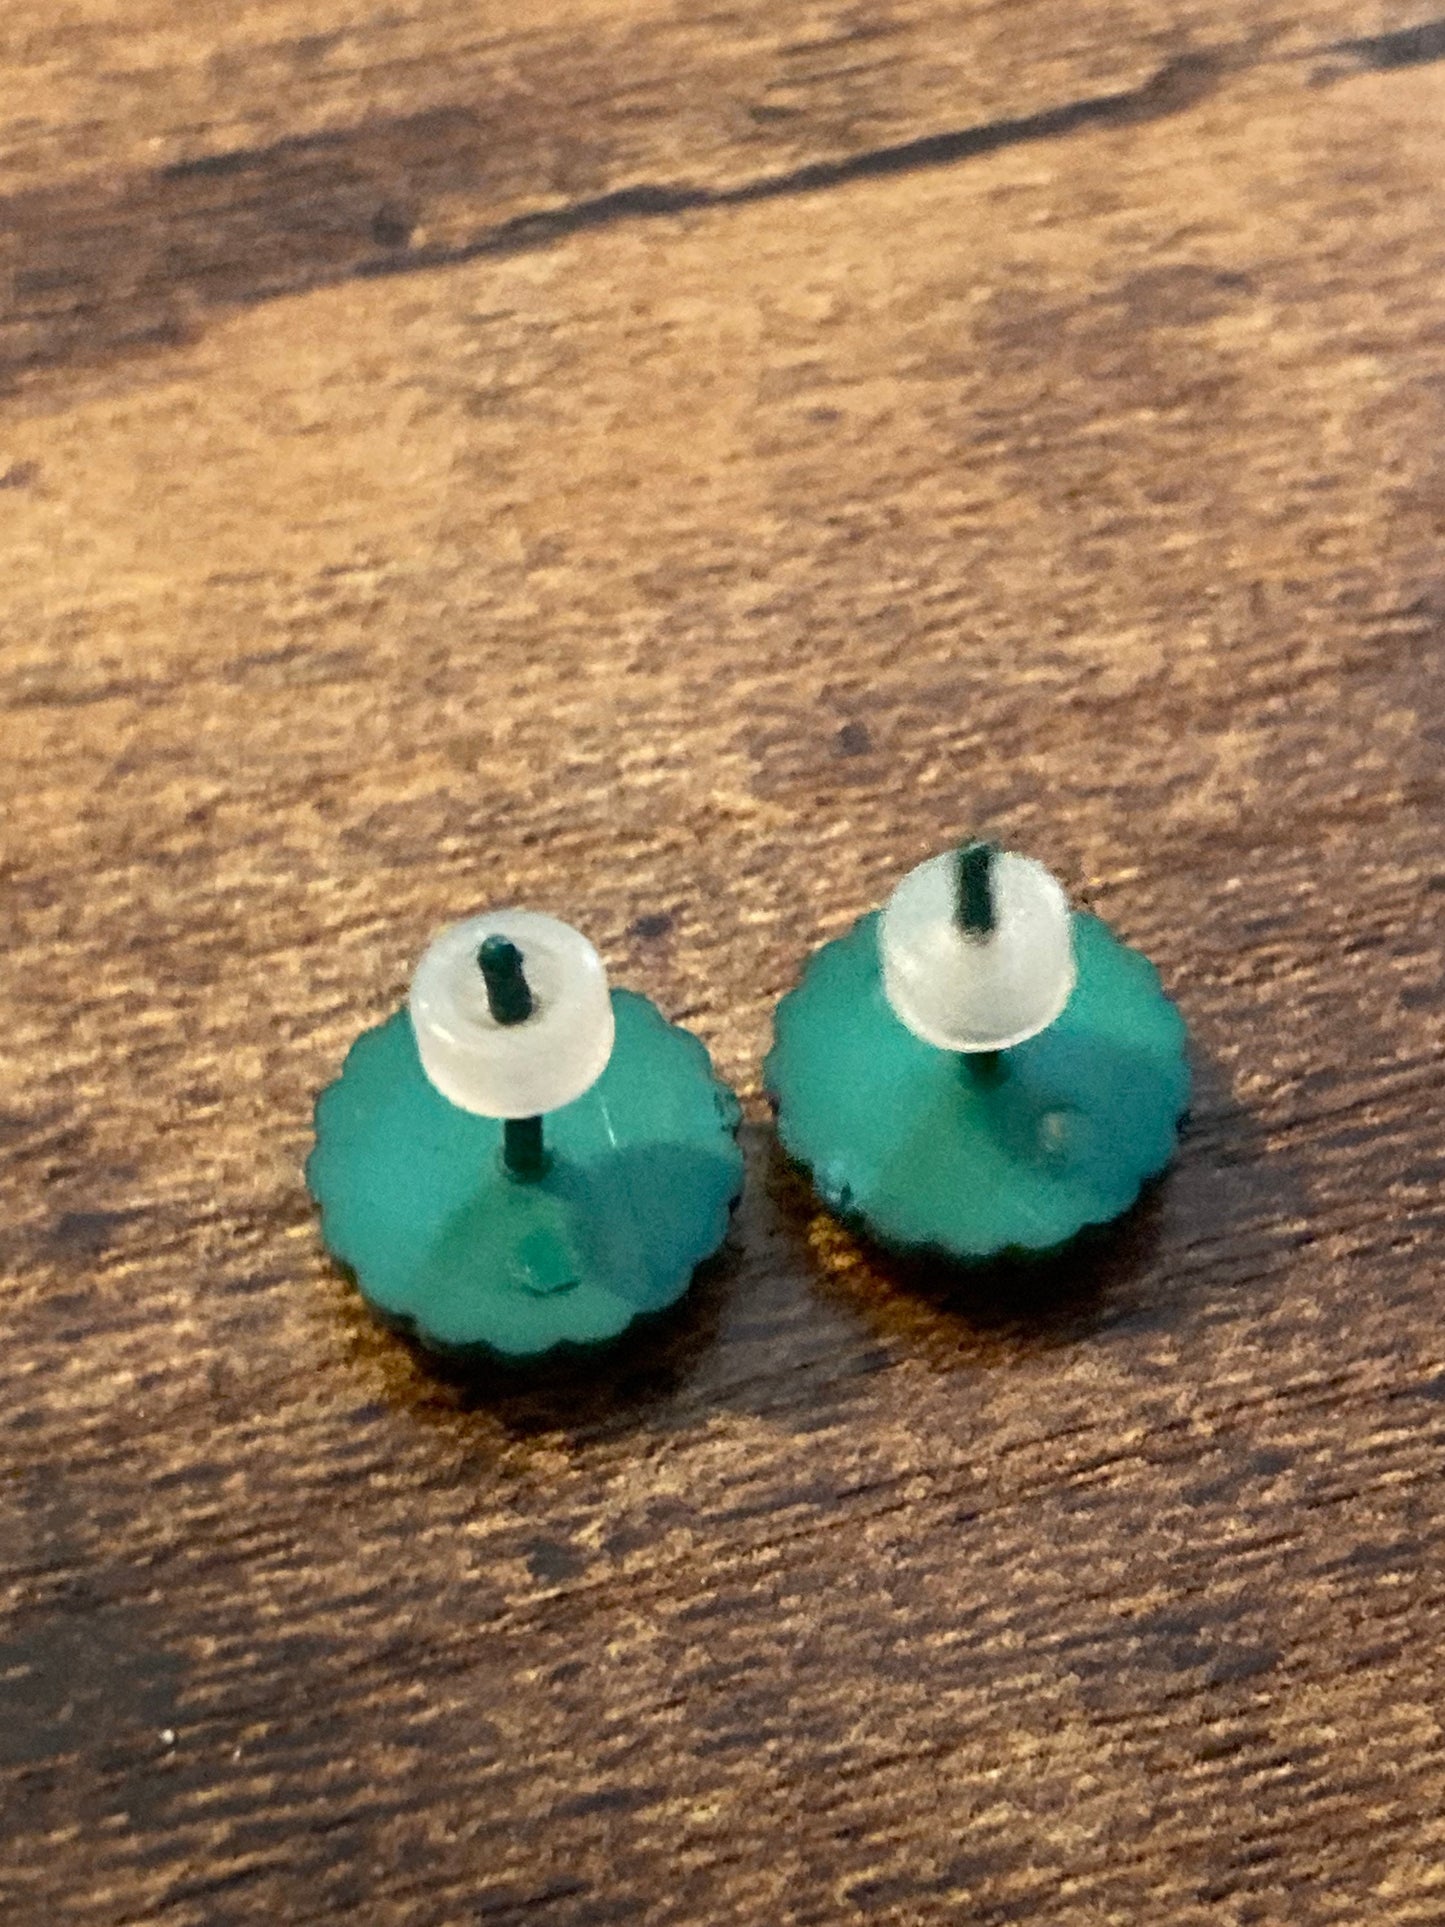 Small Green Retro plastic button stud earrings for pierced ears